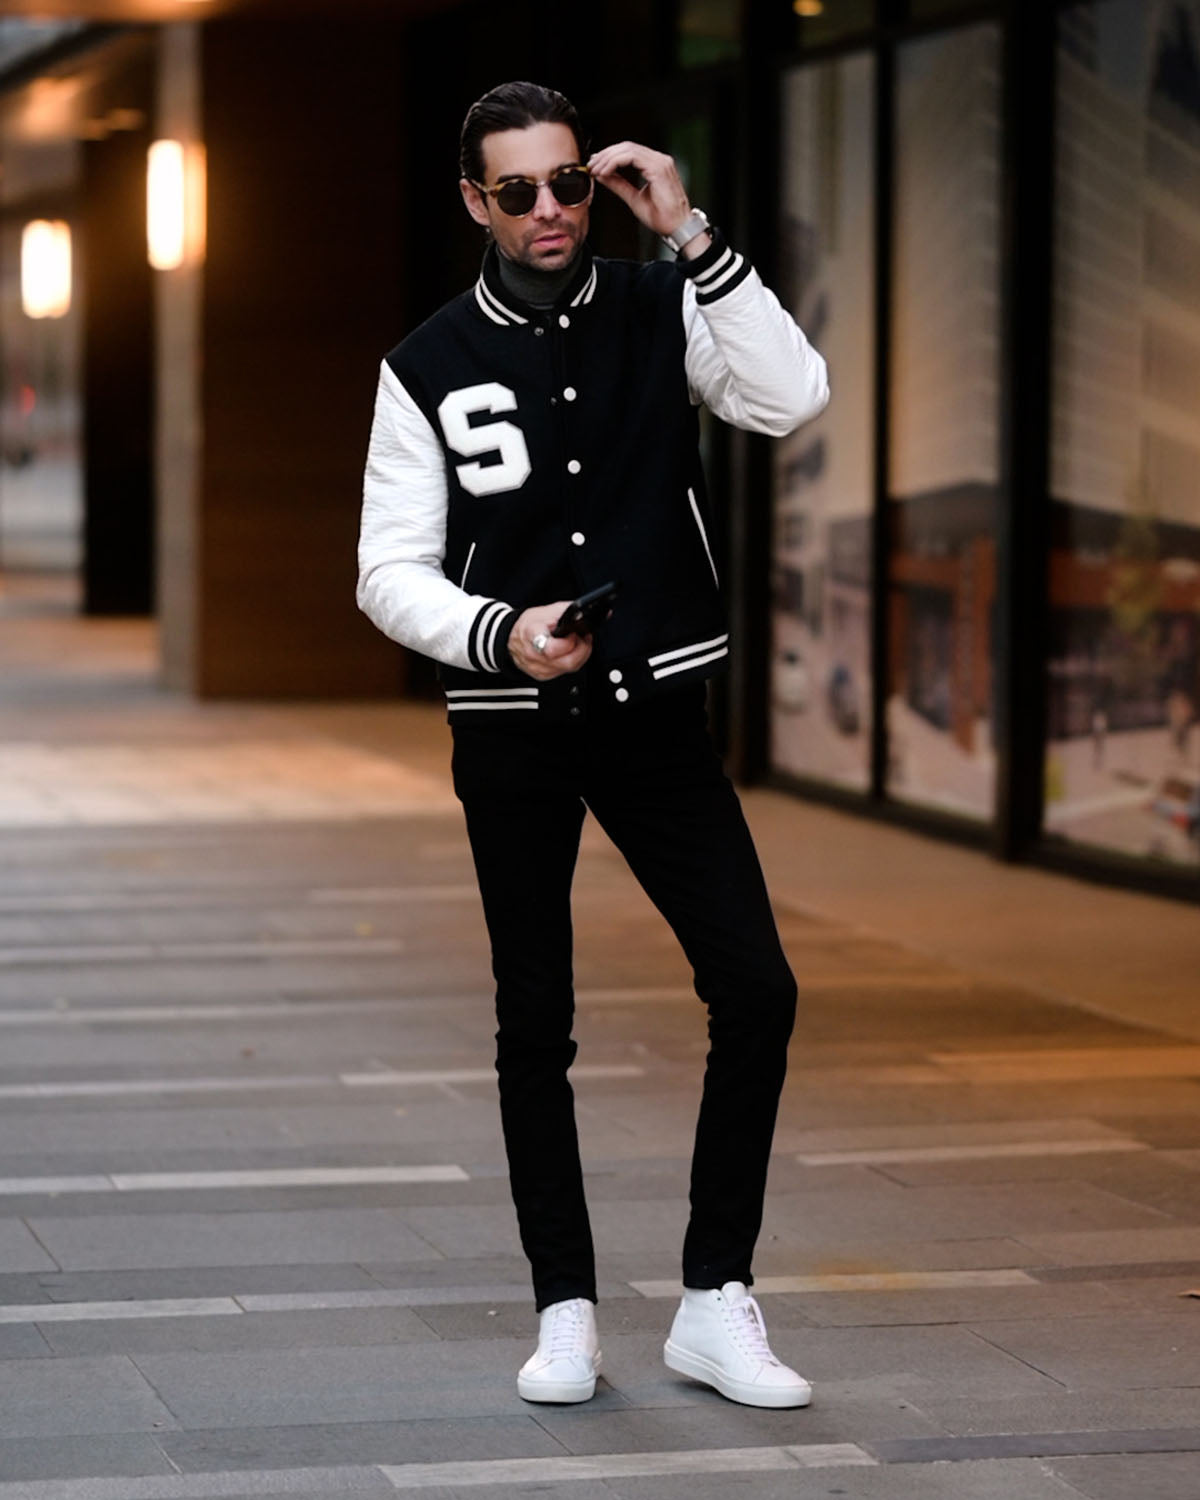 Southern Gent Varsity Jacket - Black + White